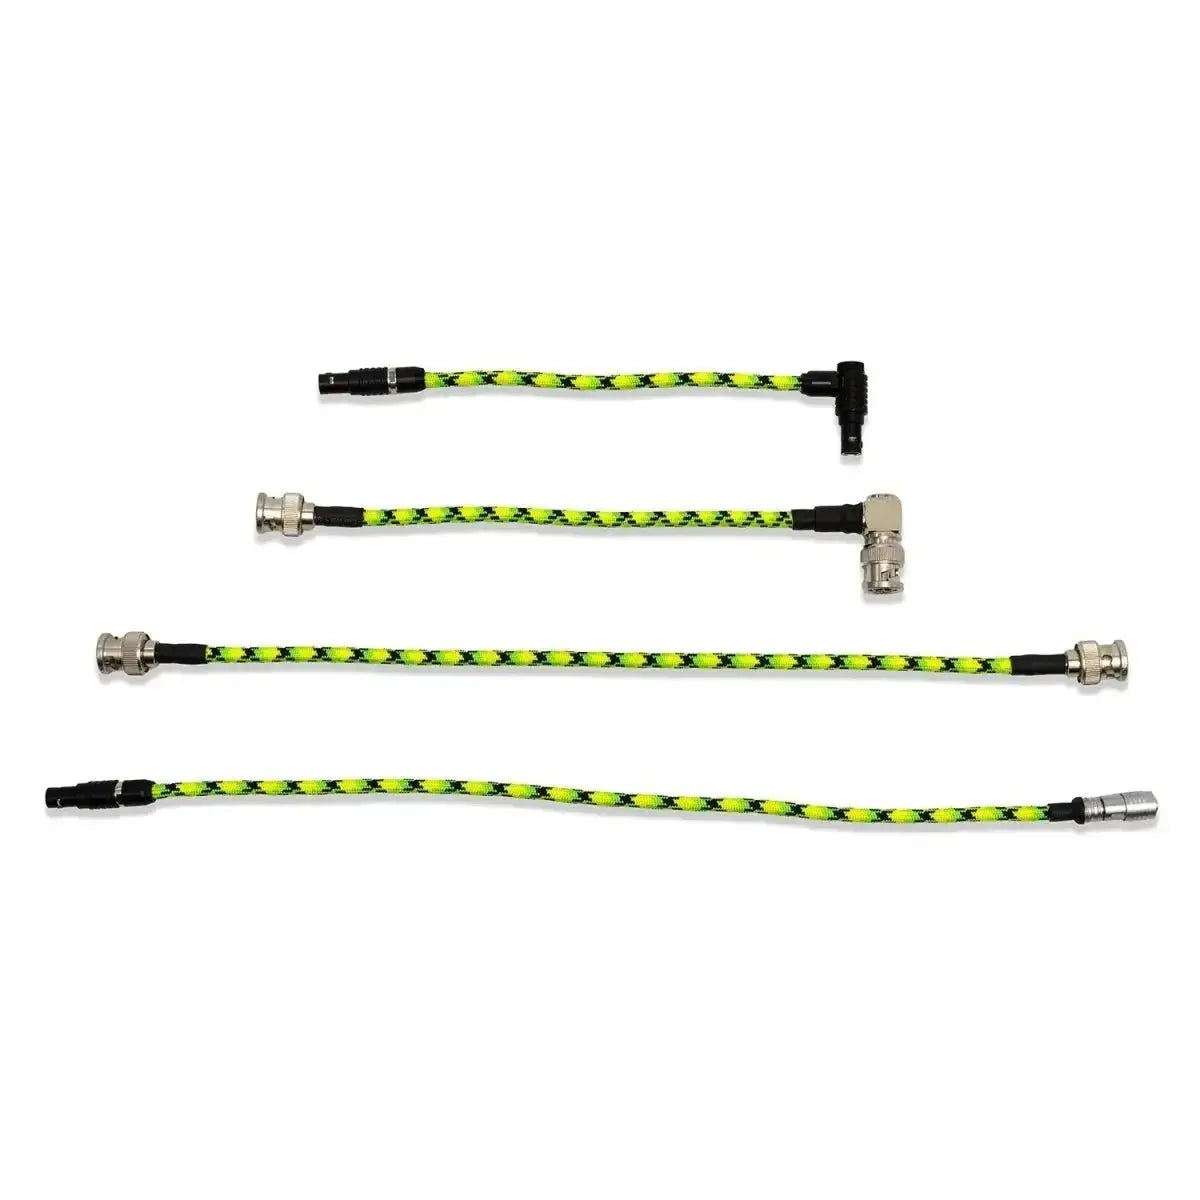 12G ISOLATOR Cable Sets for OG KOMODO